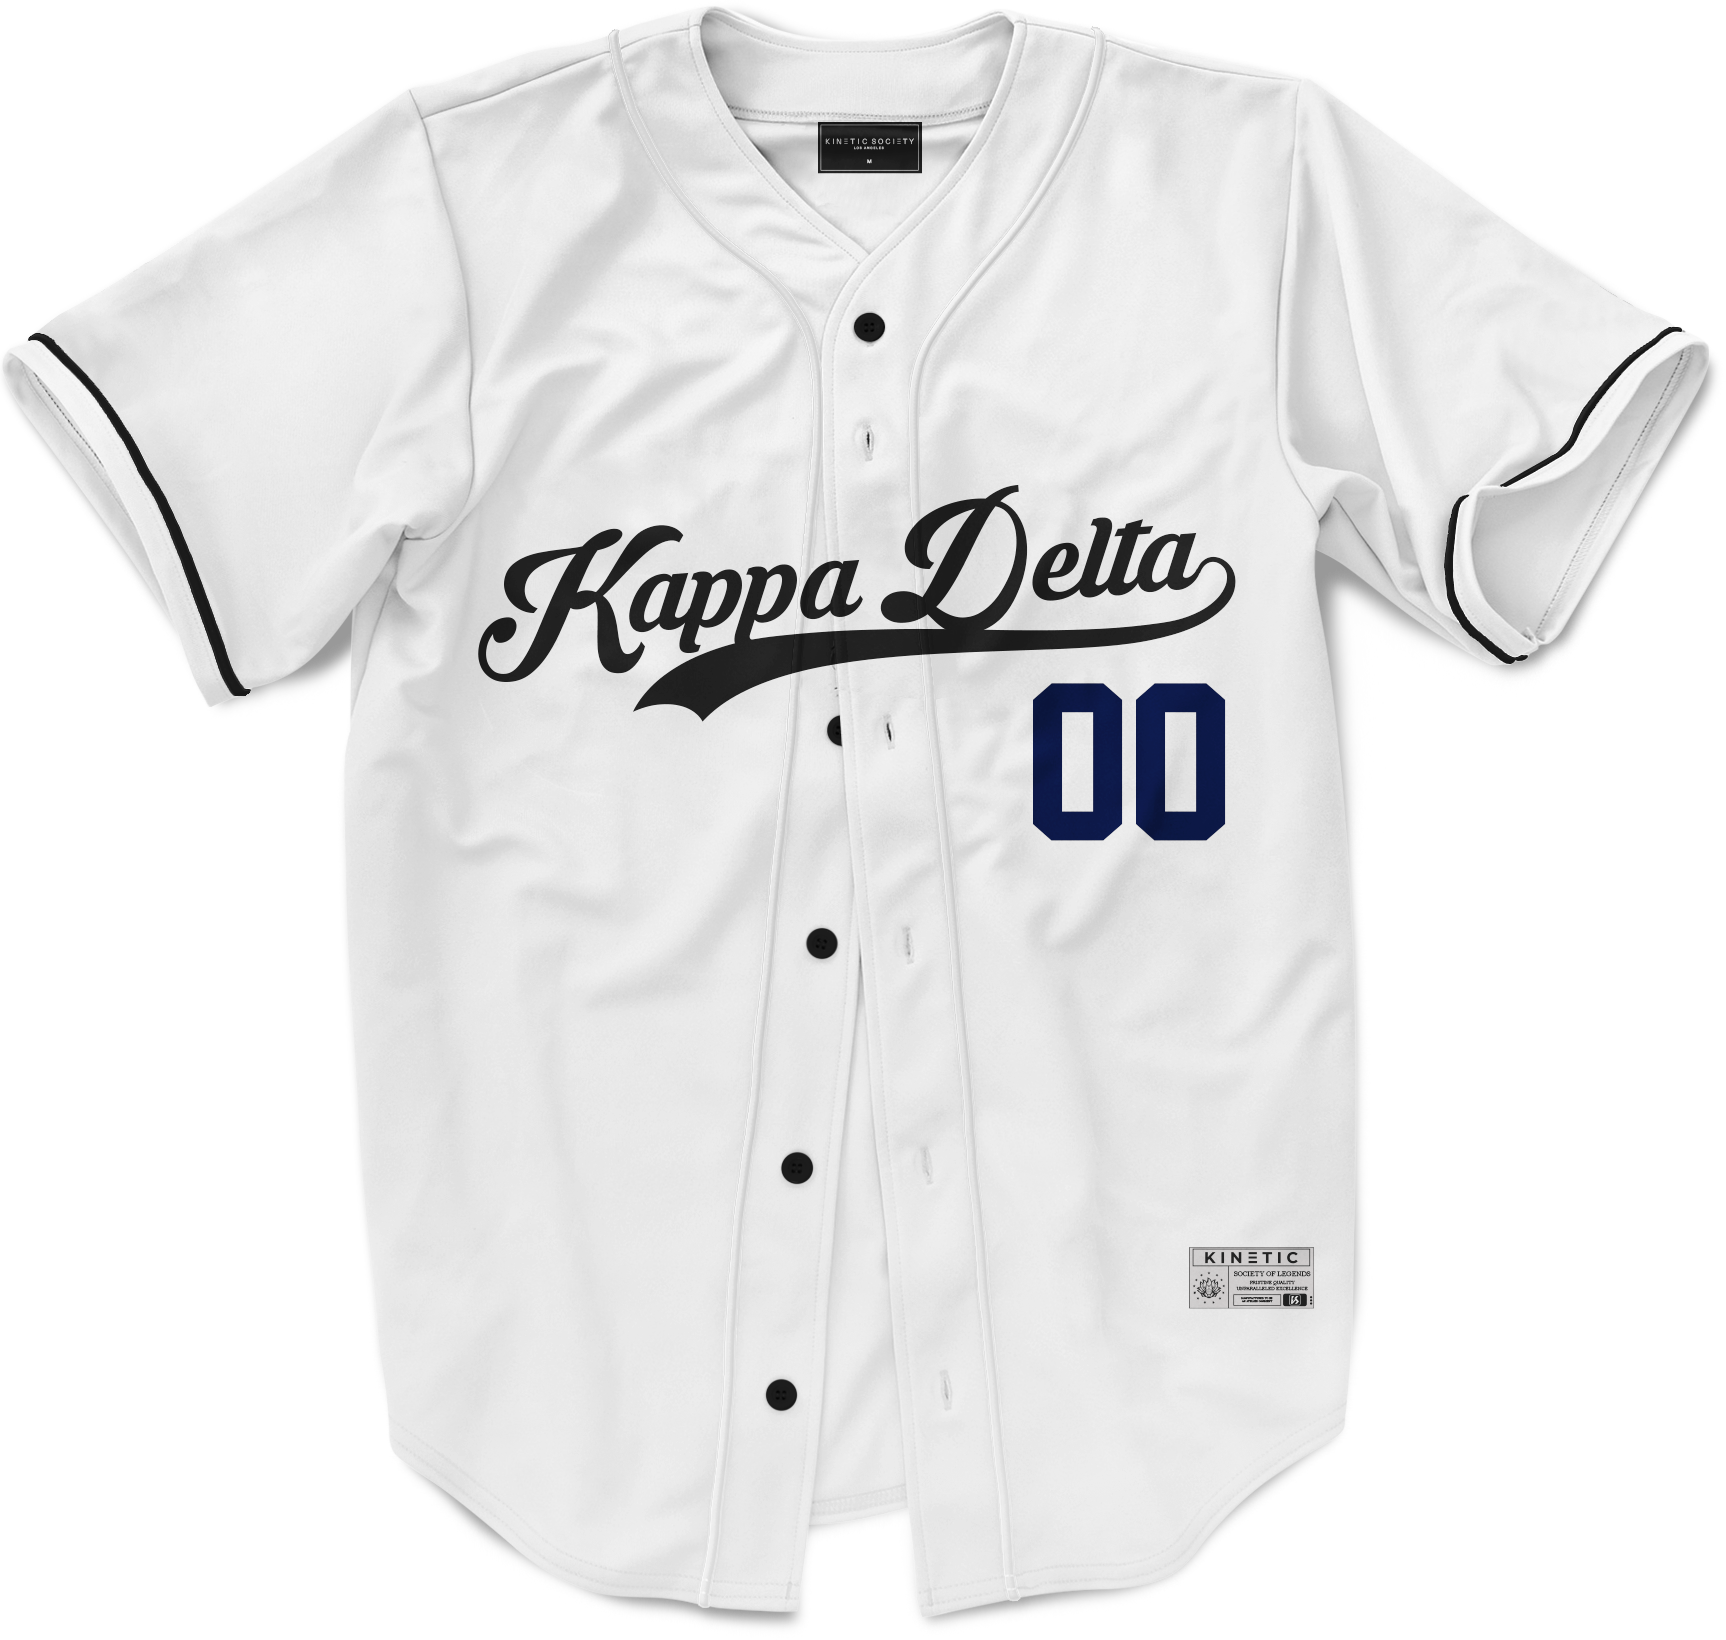 Kappa Delta - Classic Ballpark Blue Baseball Jersey